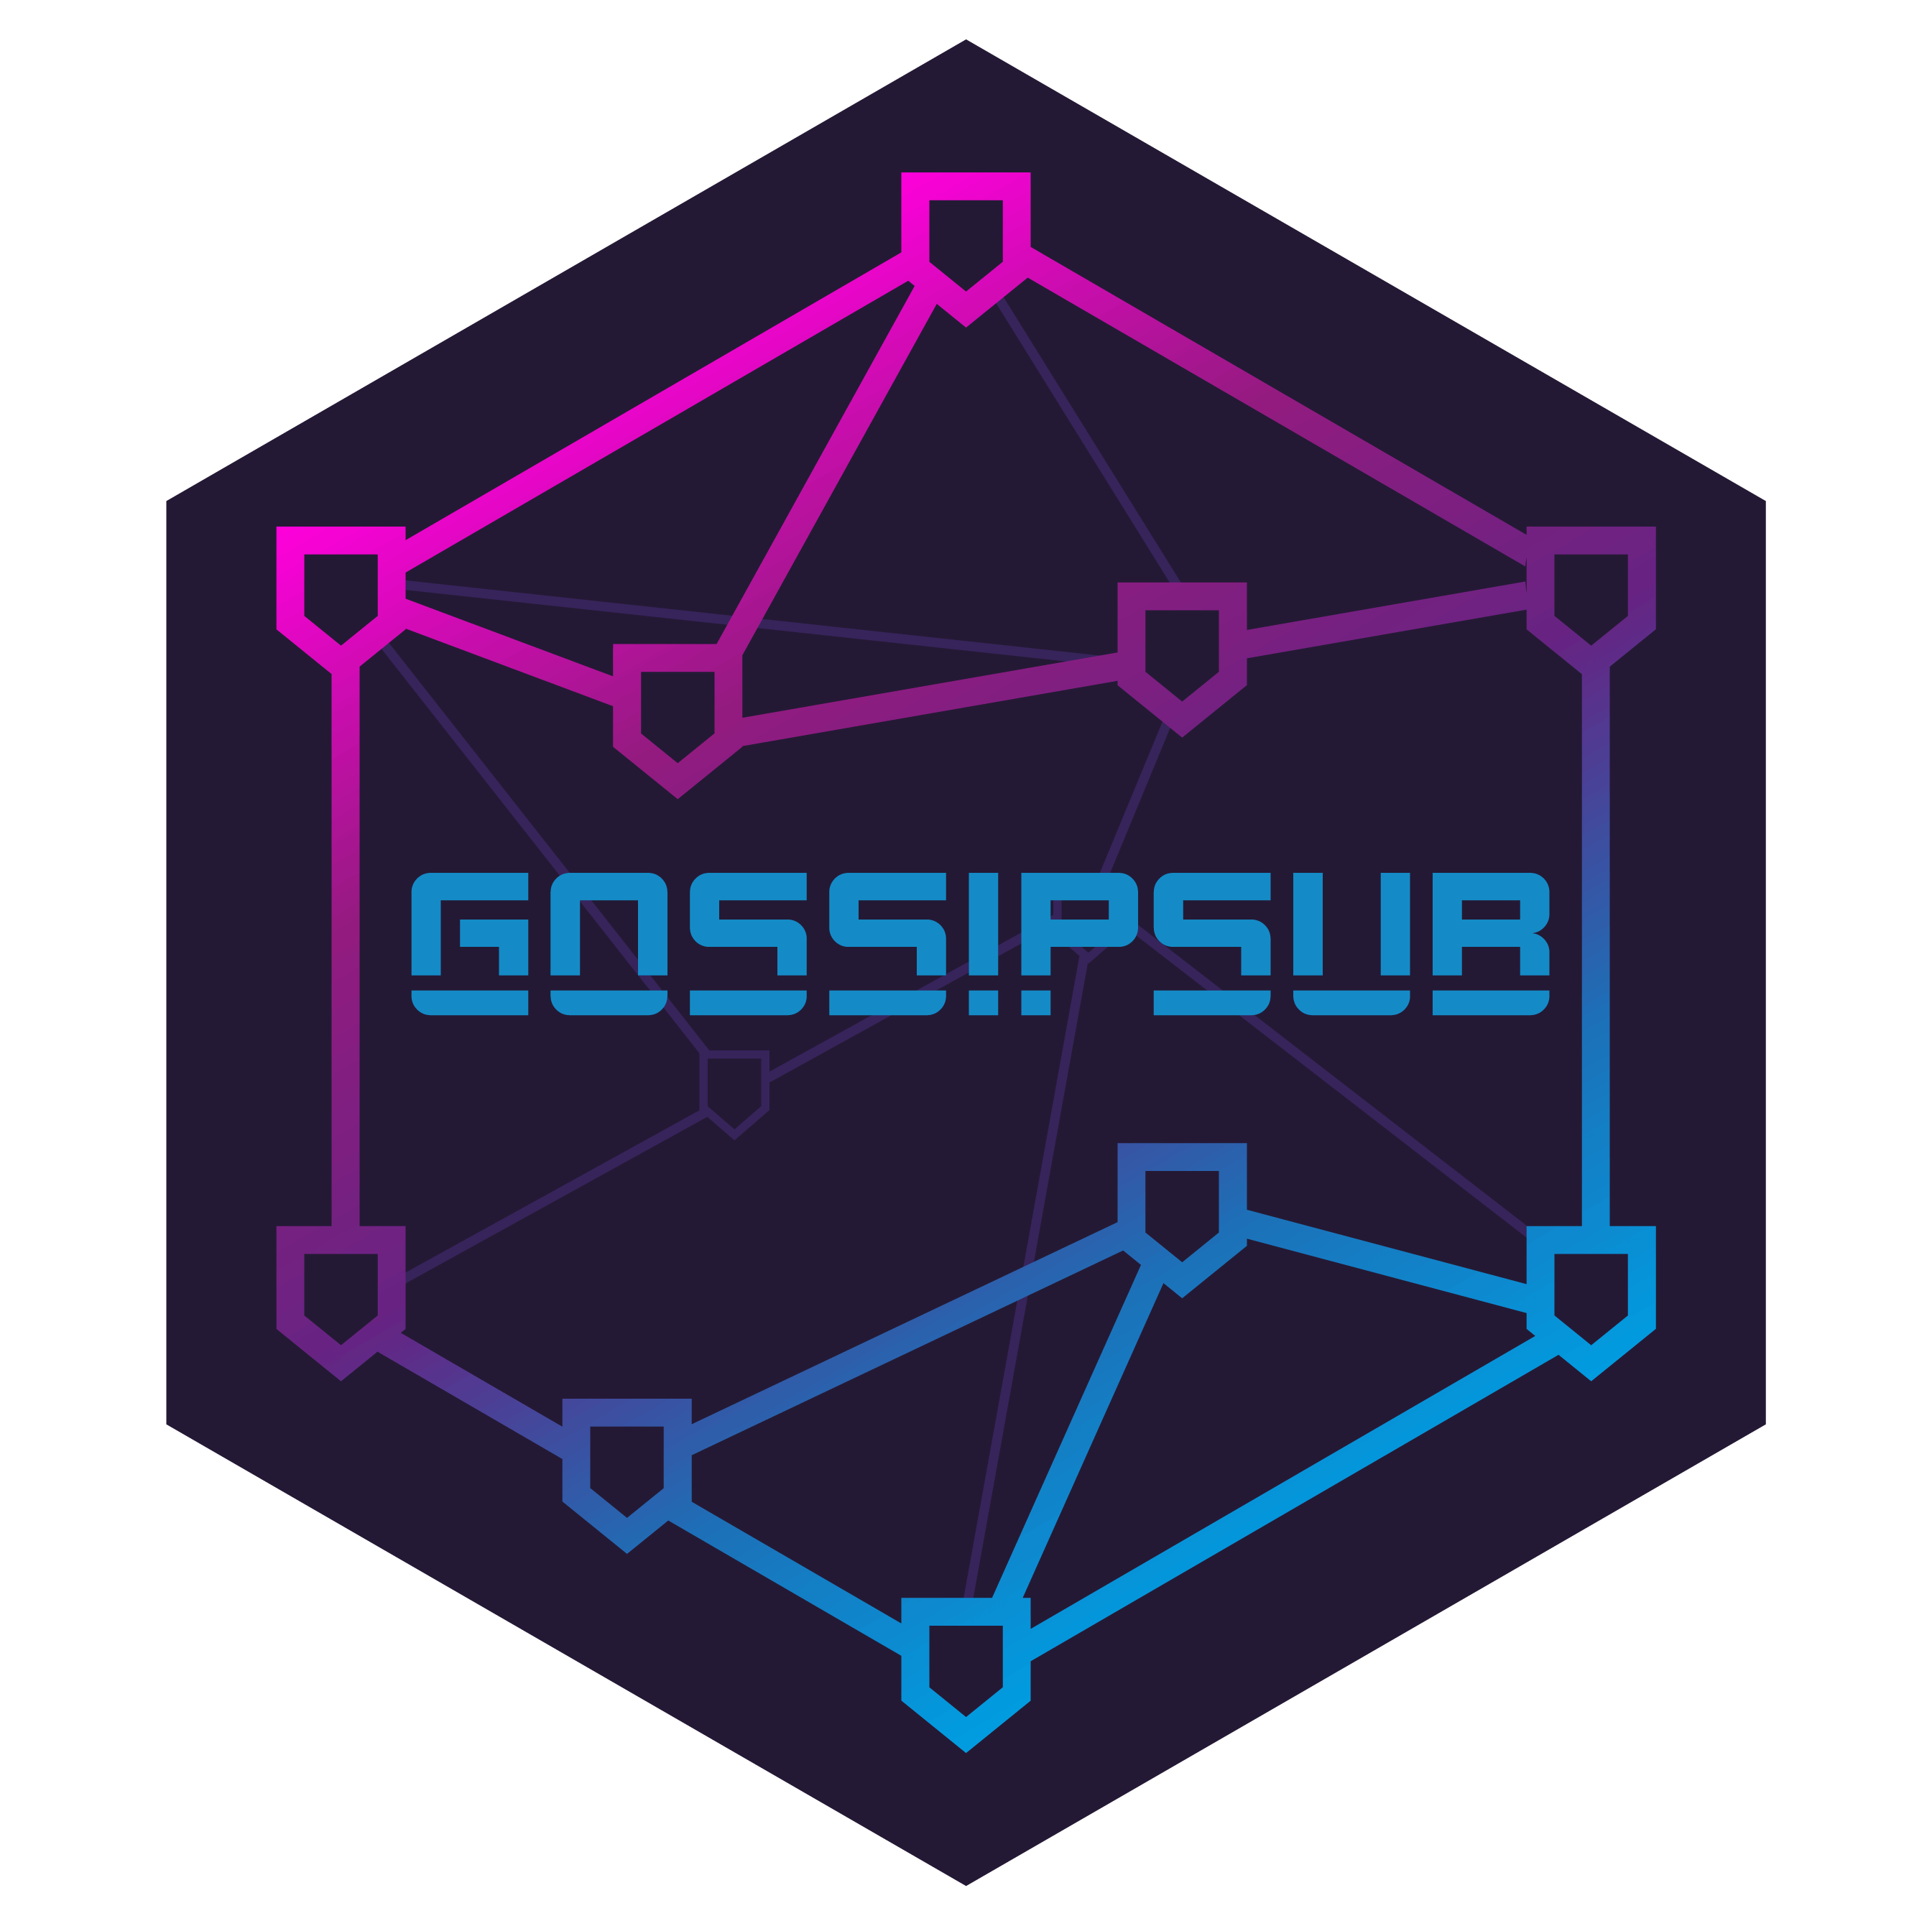 Gossipsub logo